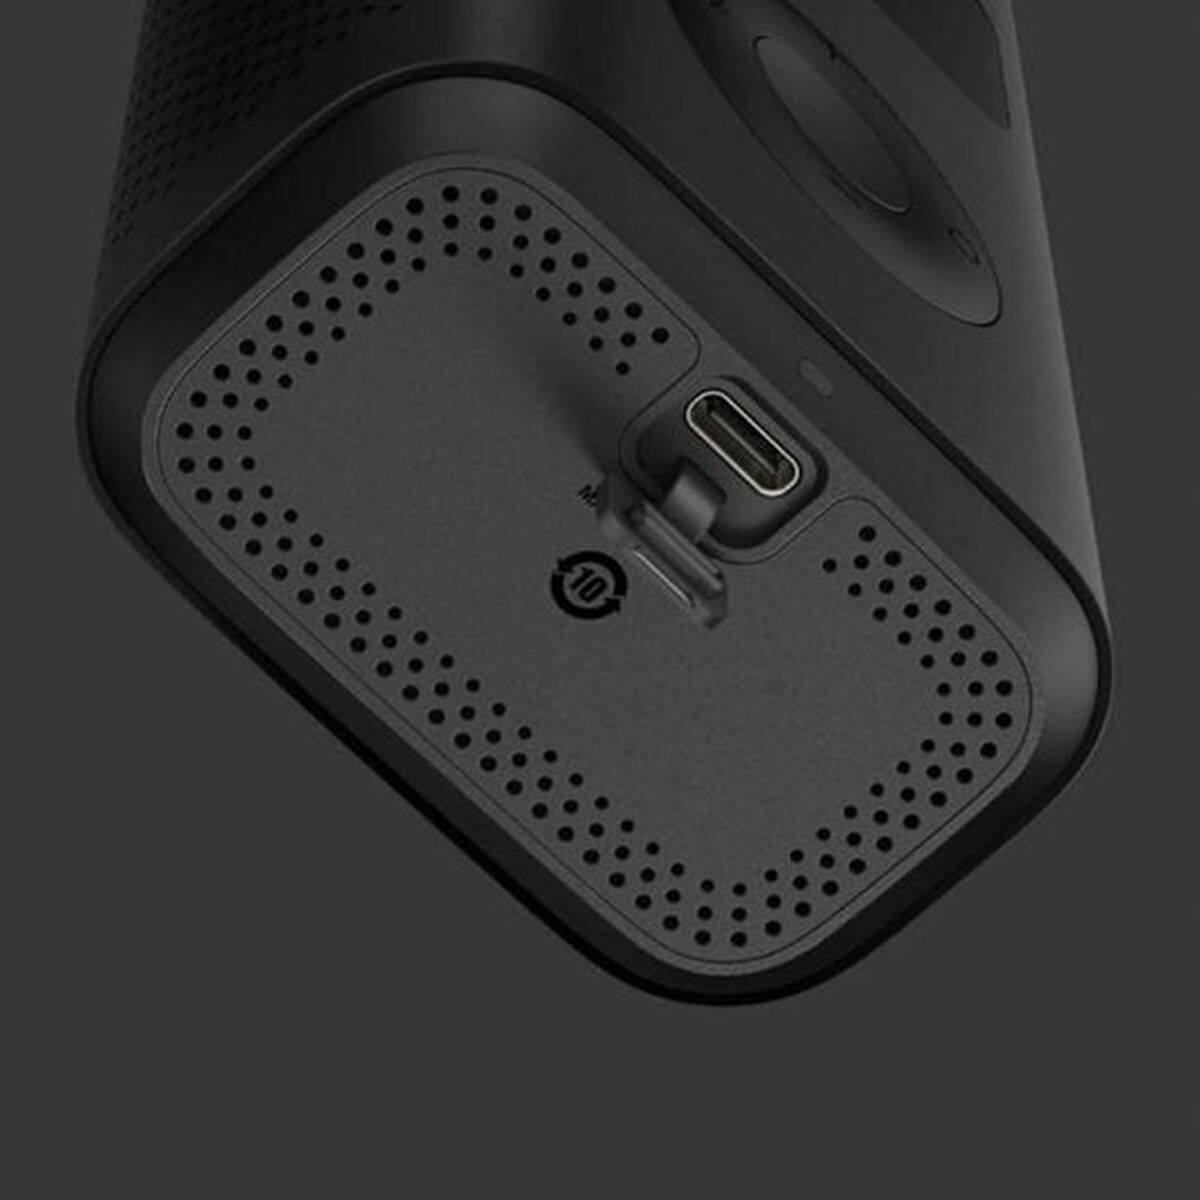 Pompa d'Aria Xiaomi 1S